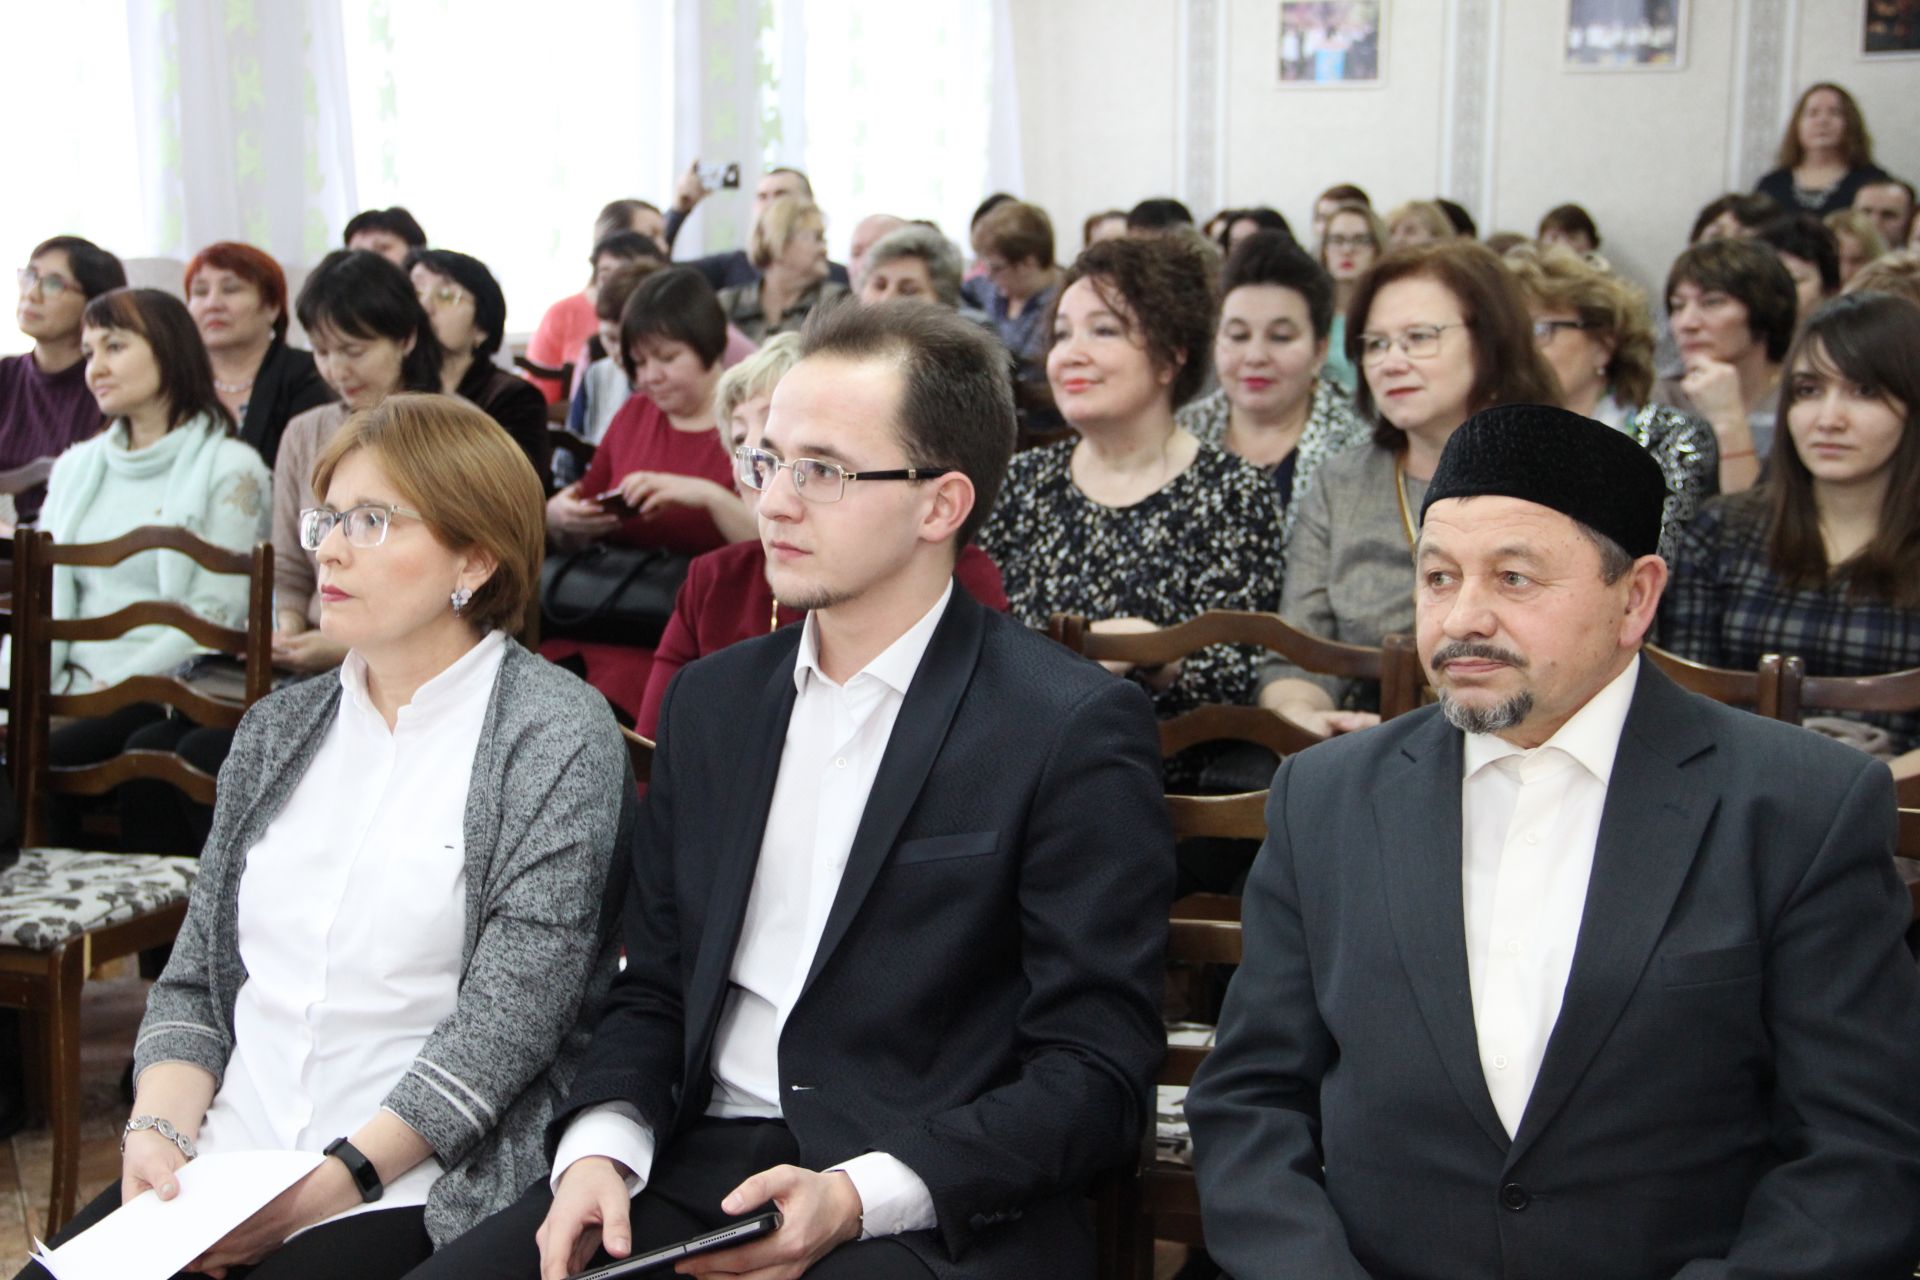 Яшел Үзәннең 5 гимназиясендә Татар конгрессы җыен үткәрде